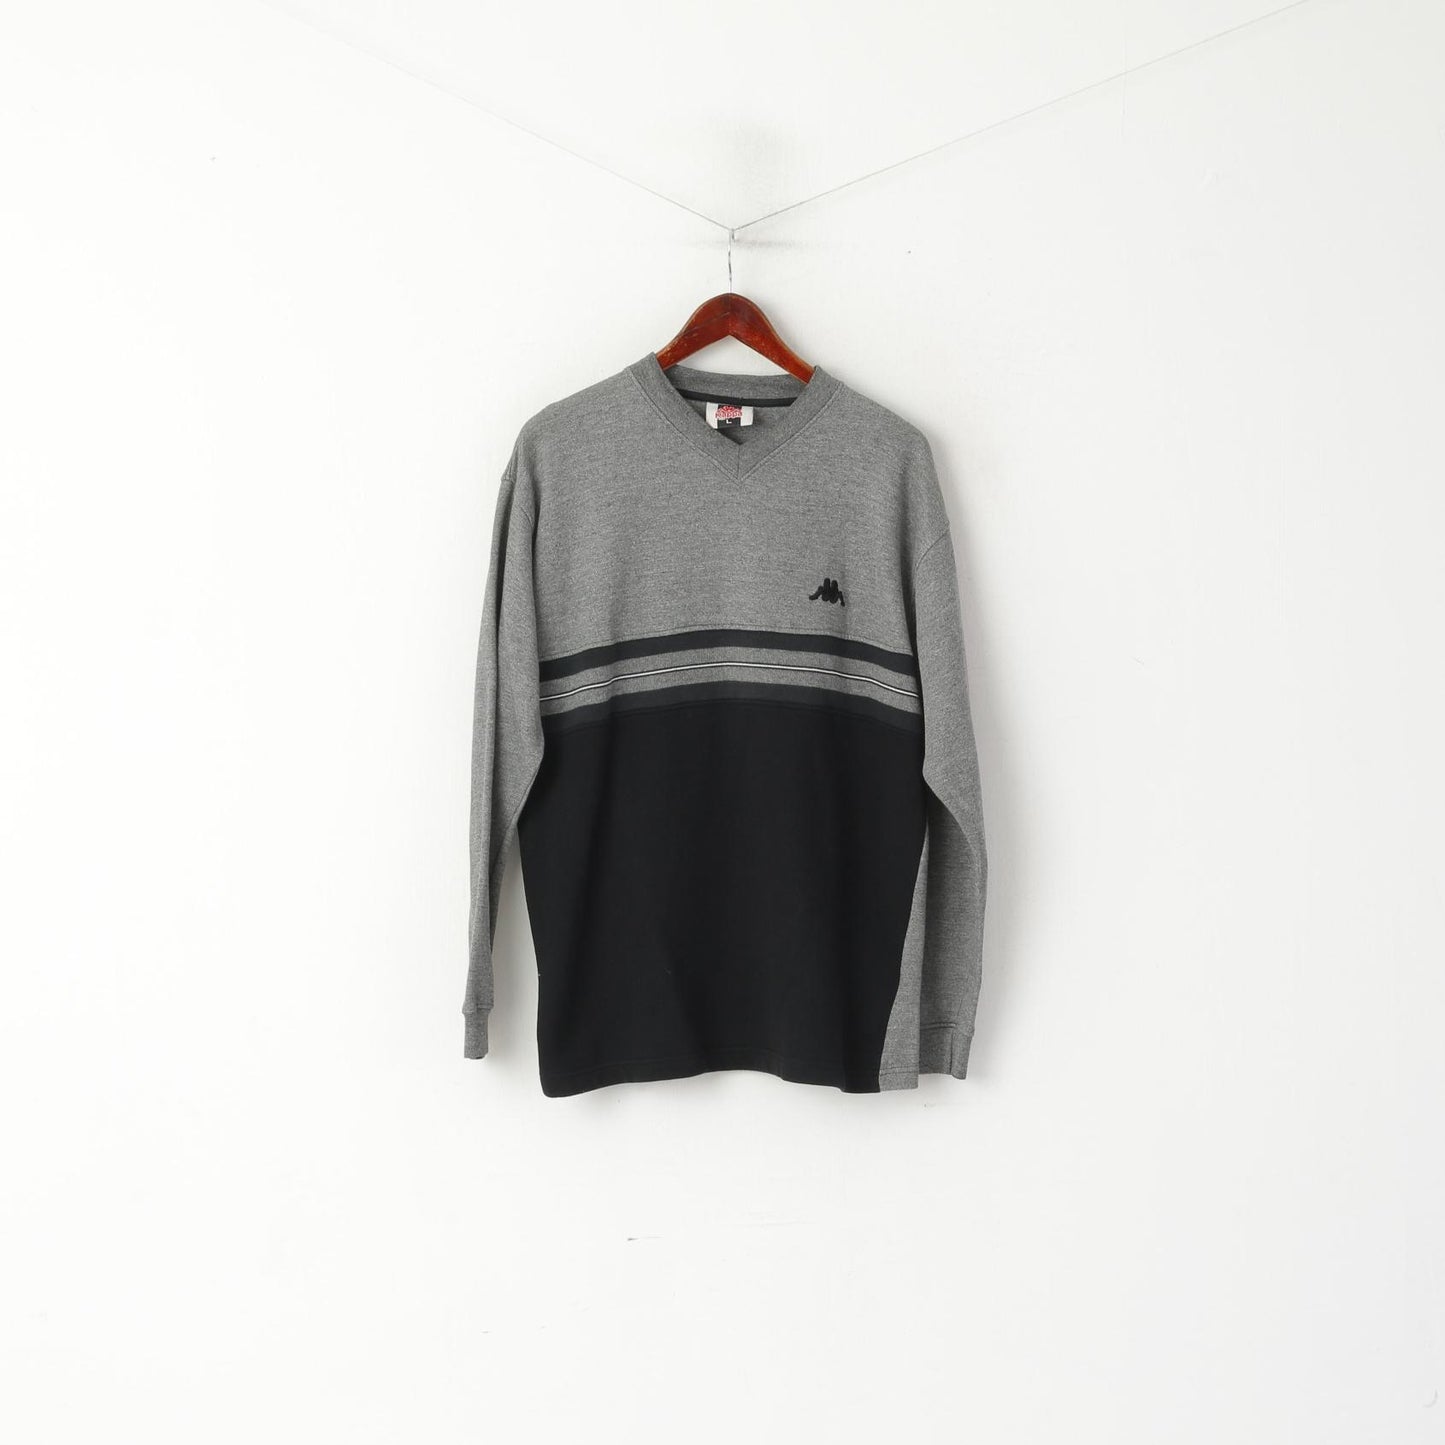 Kappa Men L Sweatshirt Gray Vintage Cotton V Neck Sportswear Top